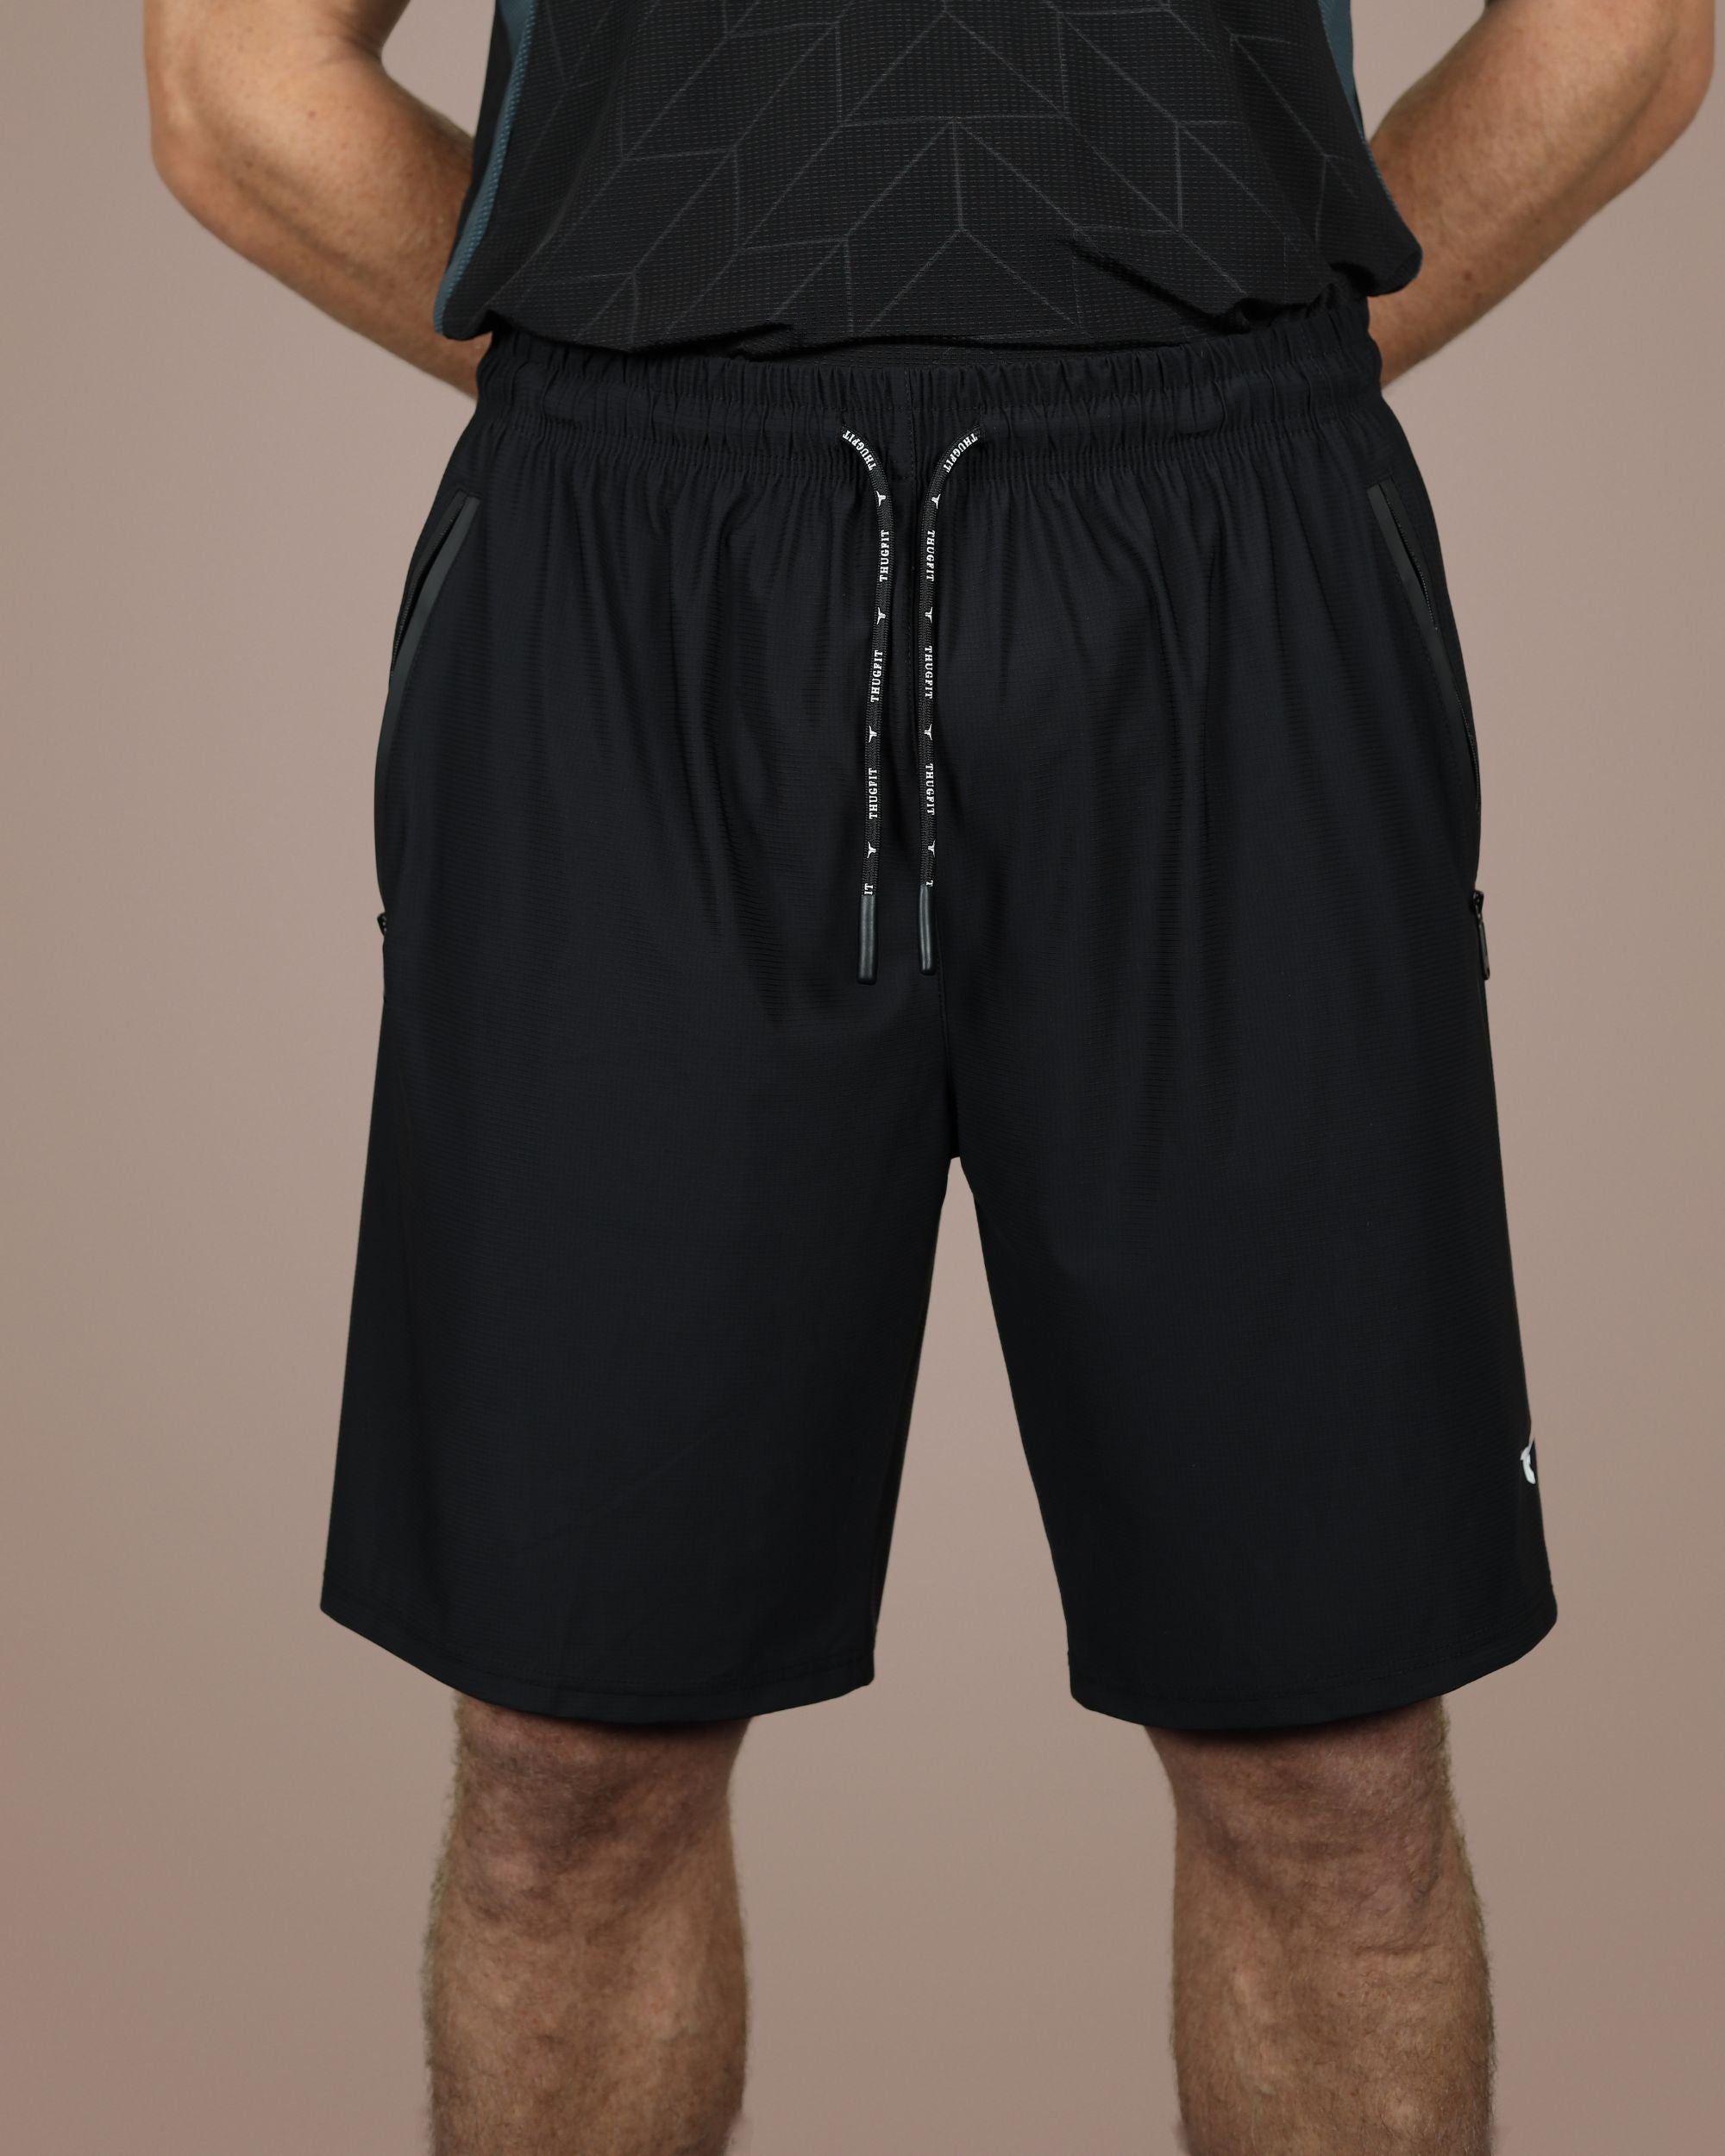 THUGFIT ActivePulse Performance Men's 11" Inseam Shorts - Black - THUGFIT